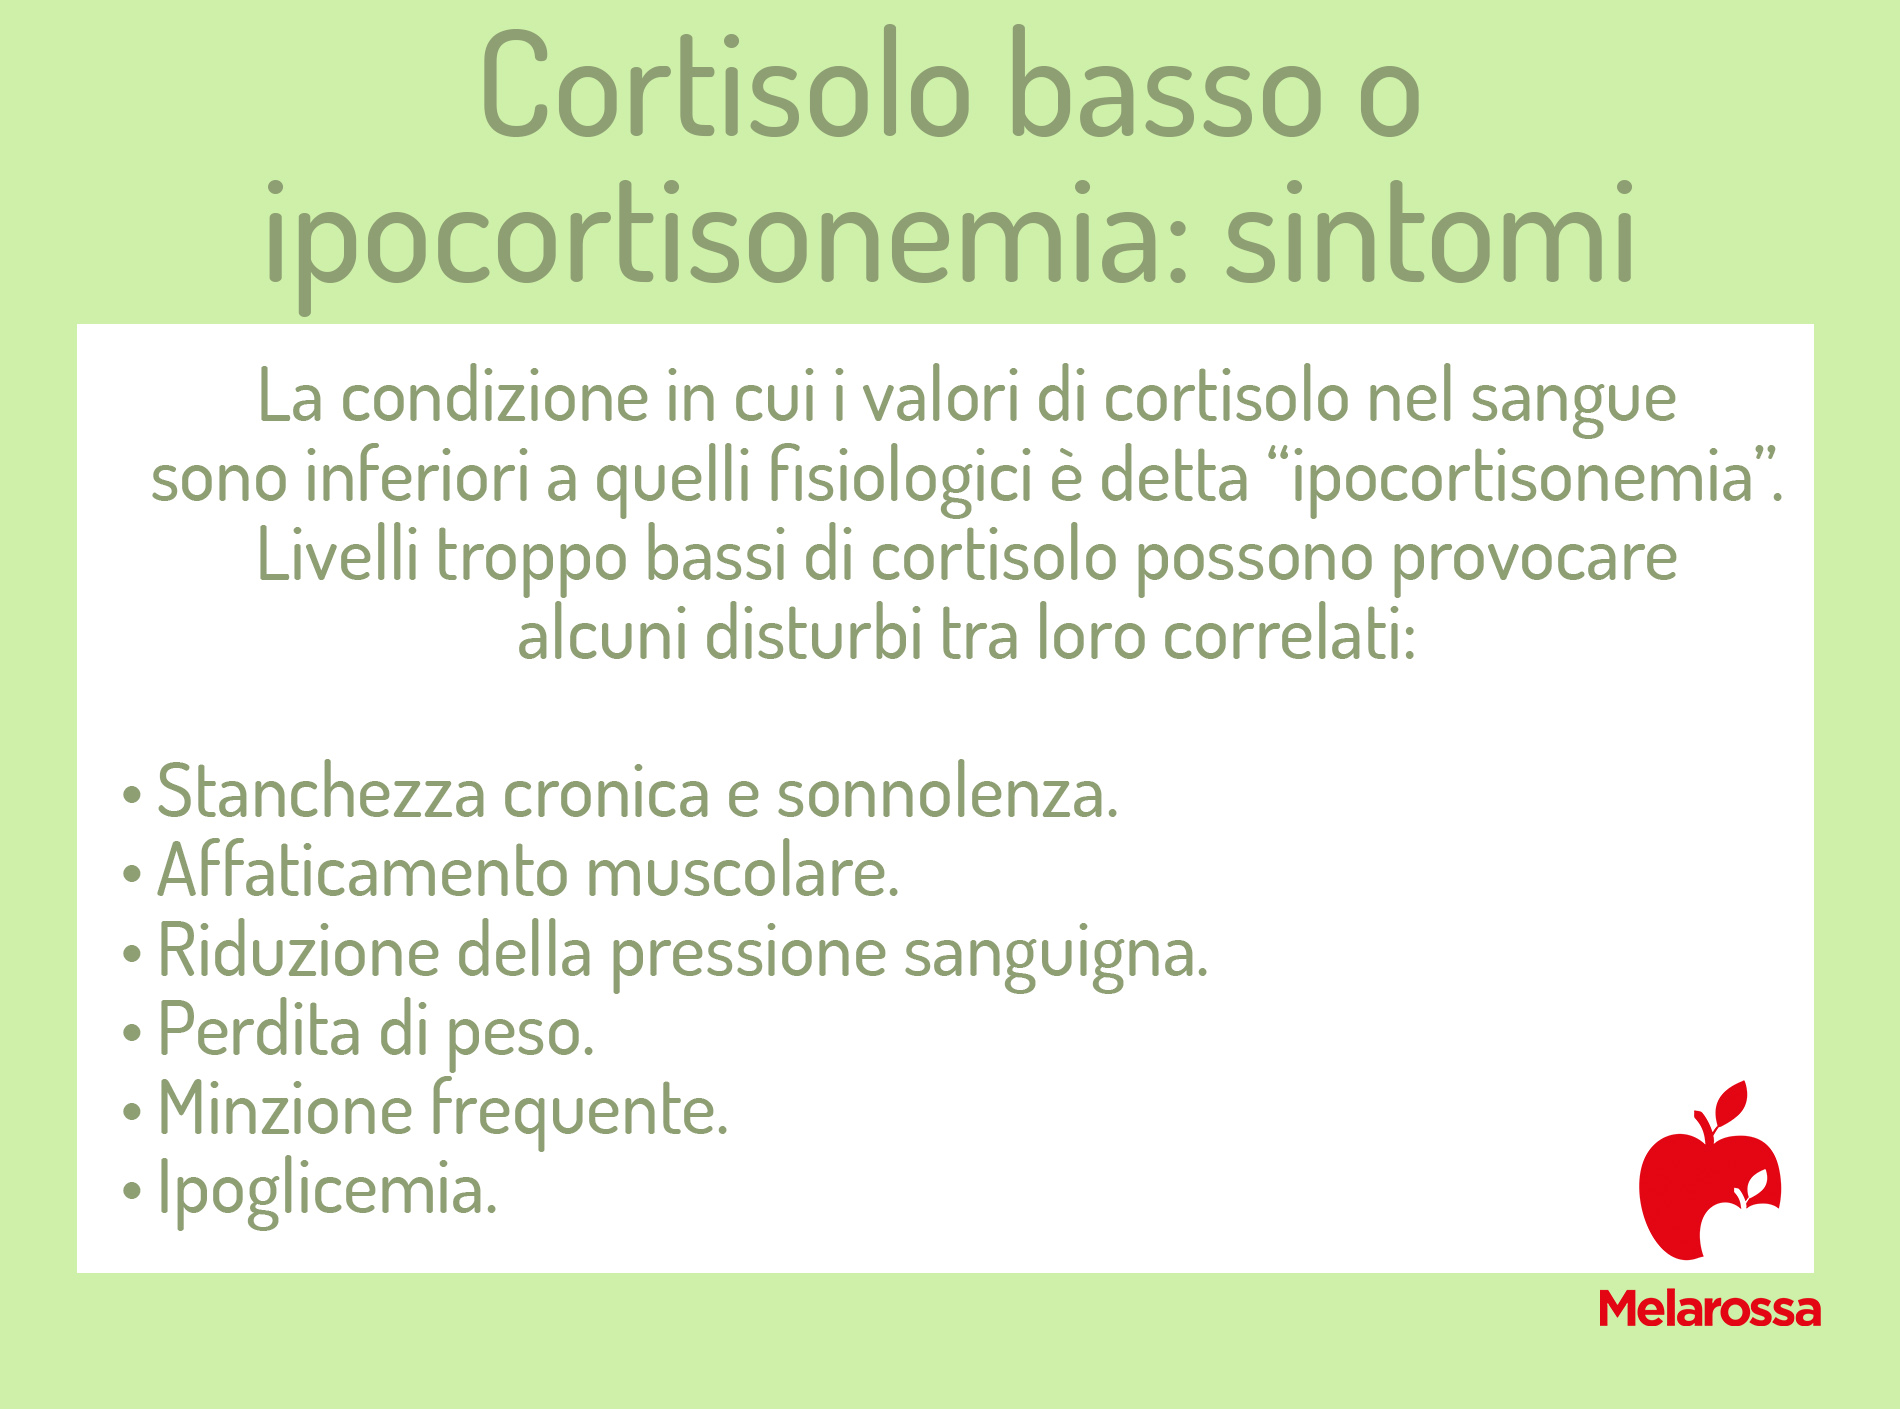 cortisolo basso: sintomi